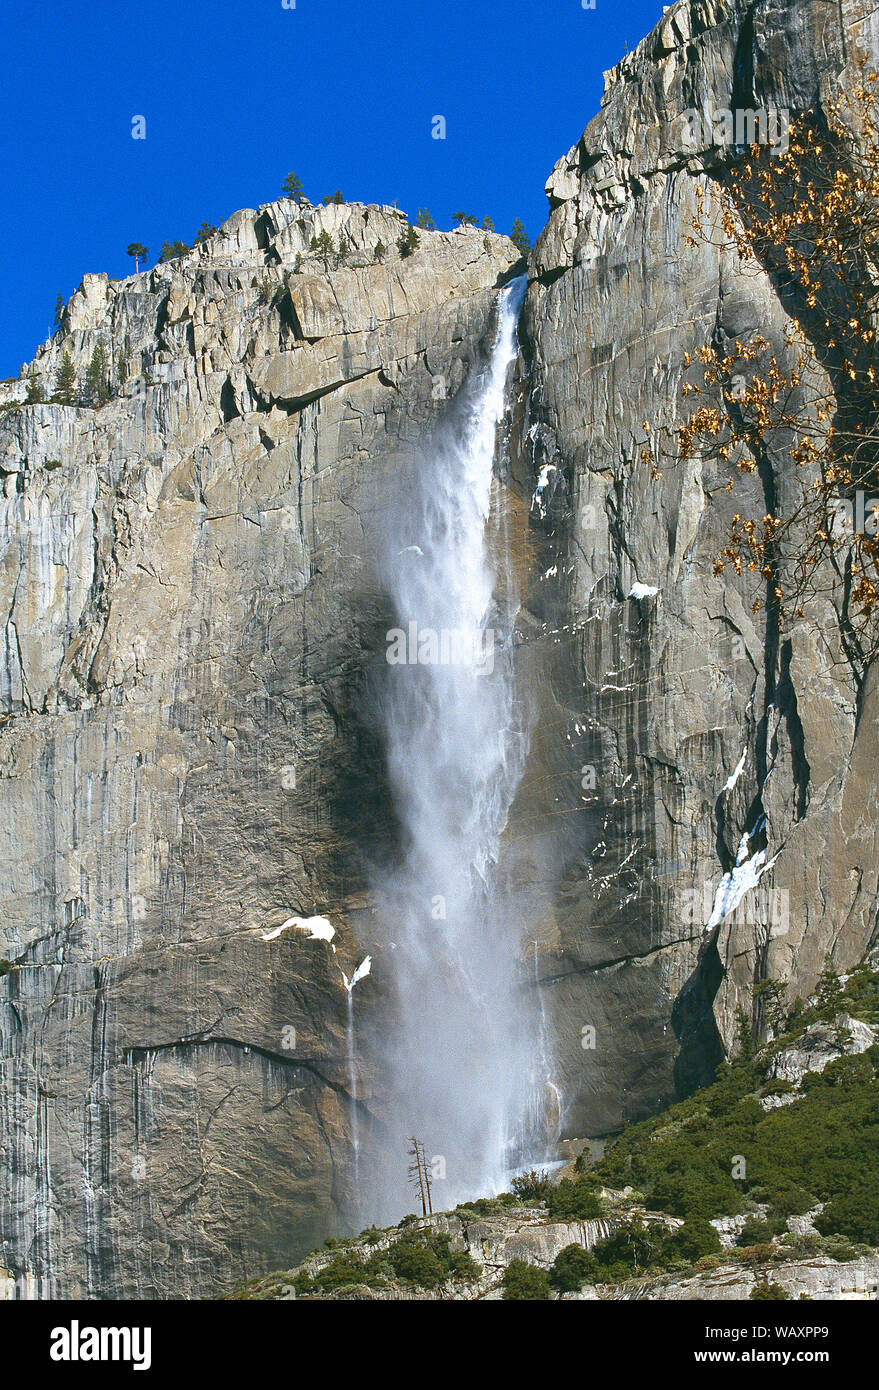 USA. California. Yosemite National Park.  Upper Yosemite Fall waterfall. Stock Photo